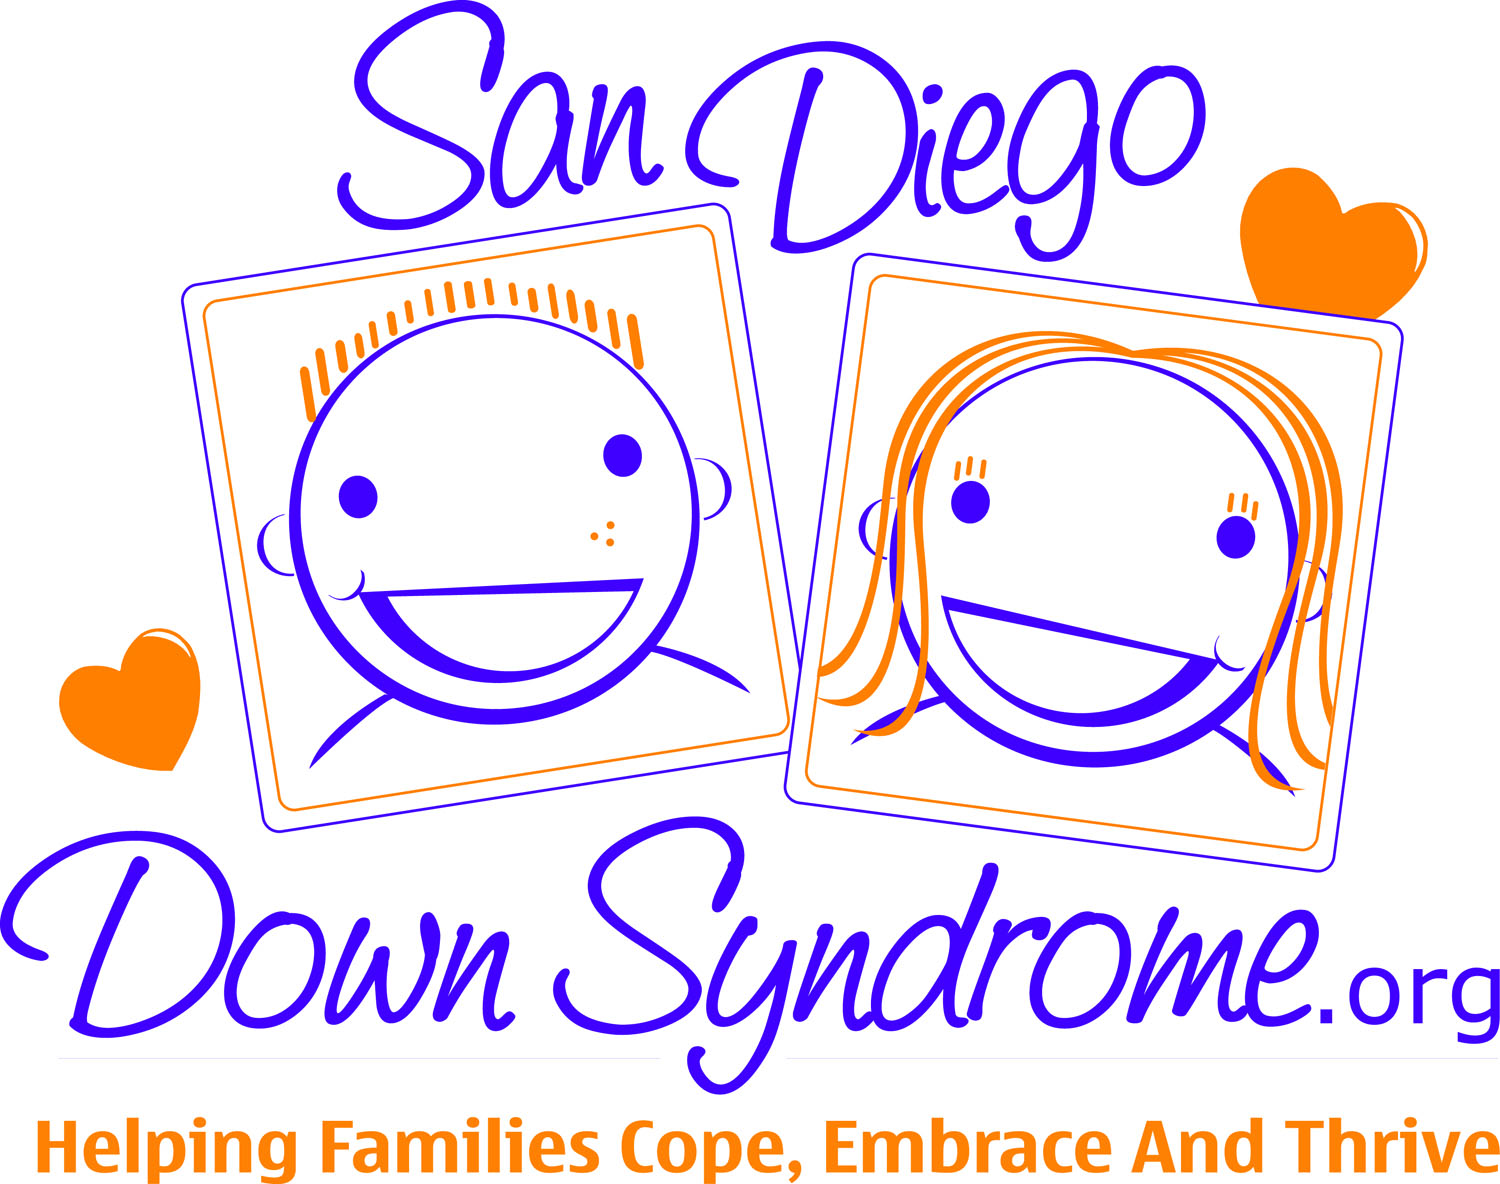 San Diego Down Syndrome. Org